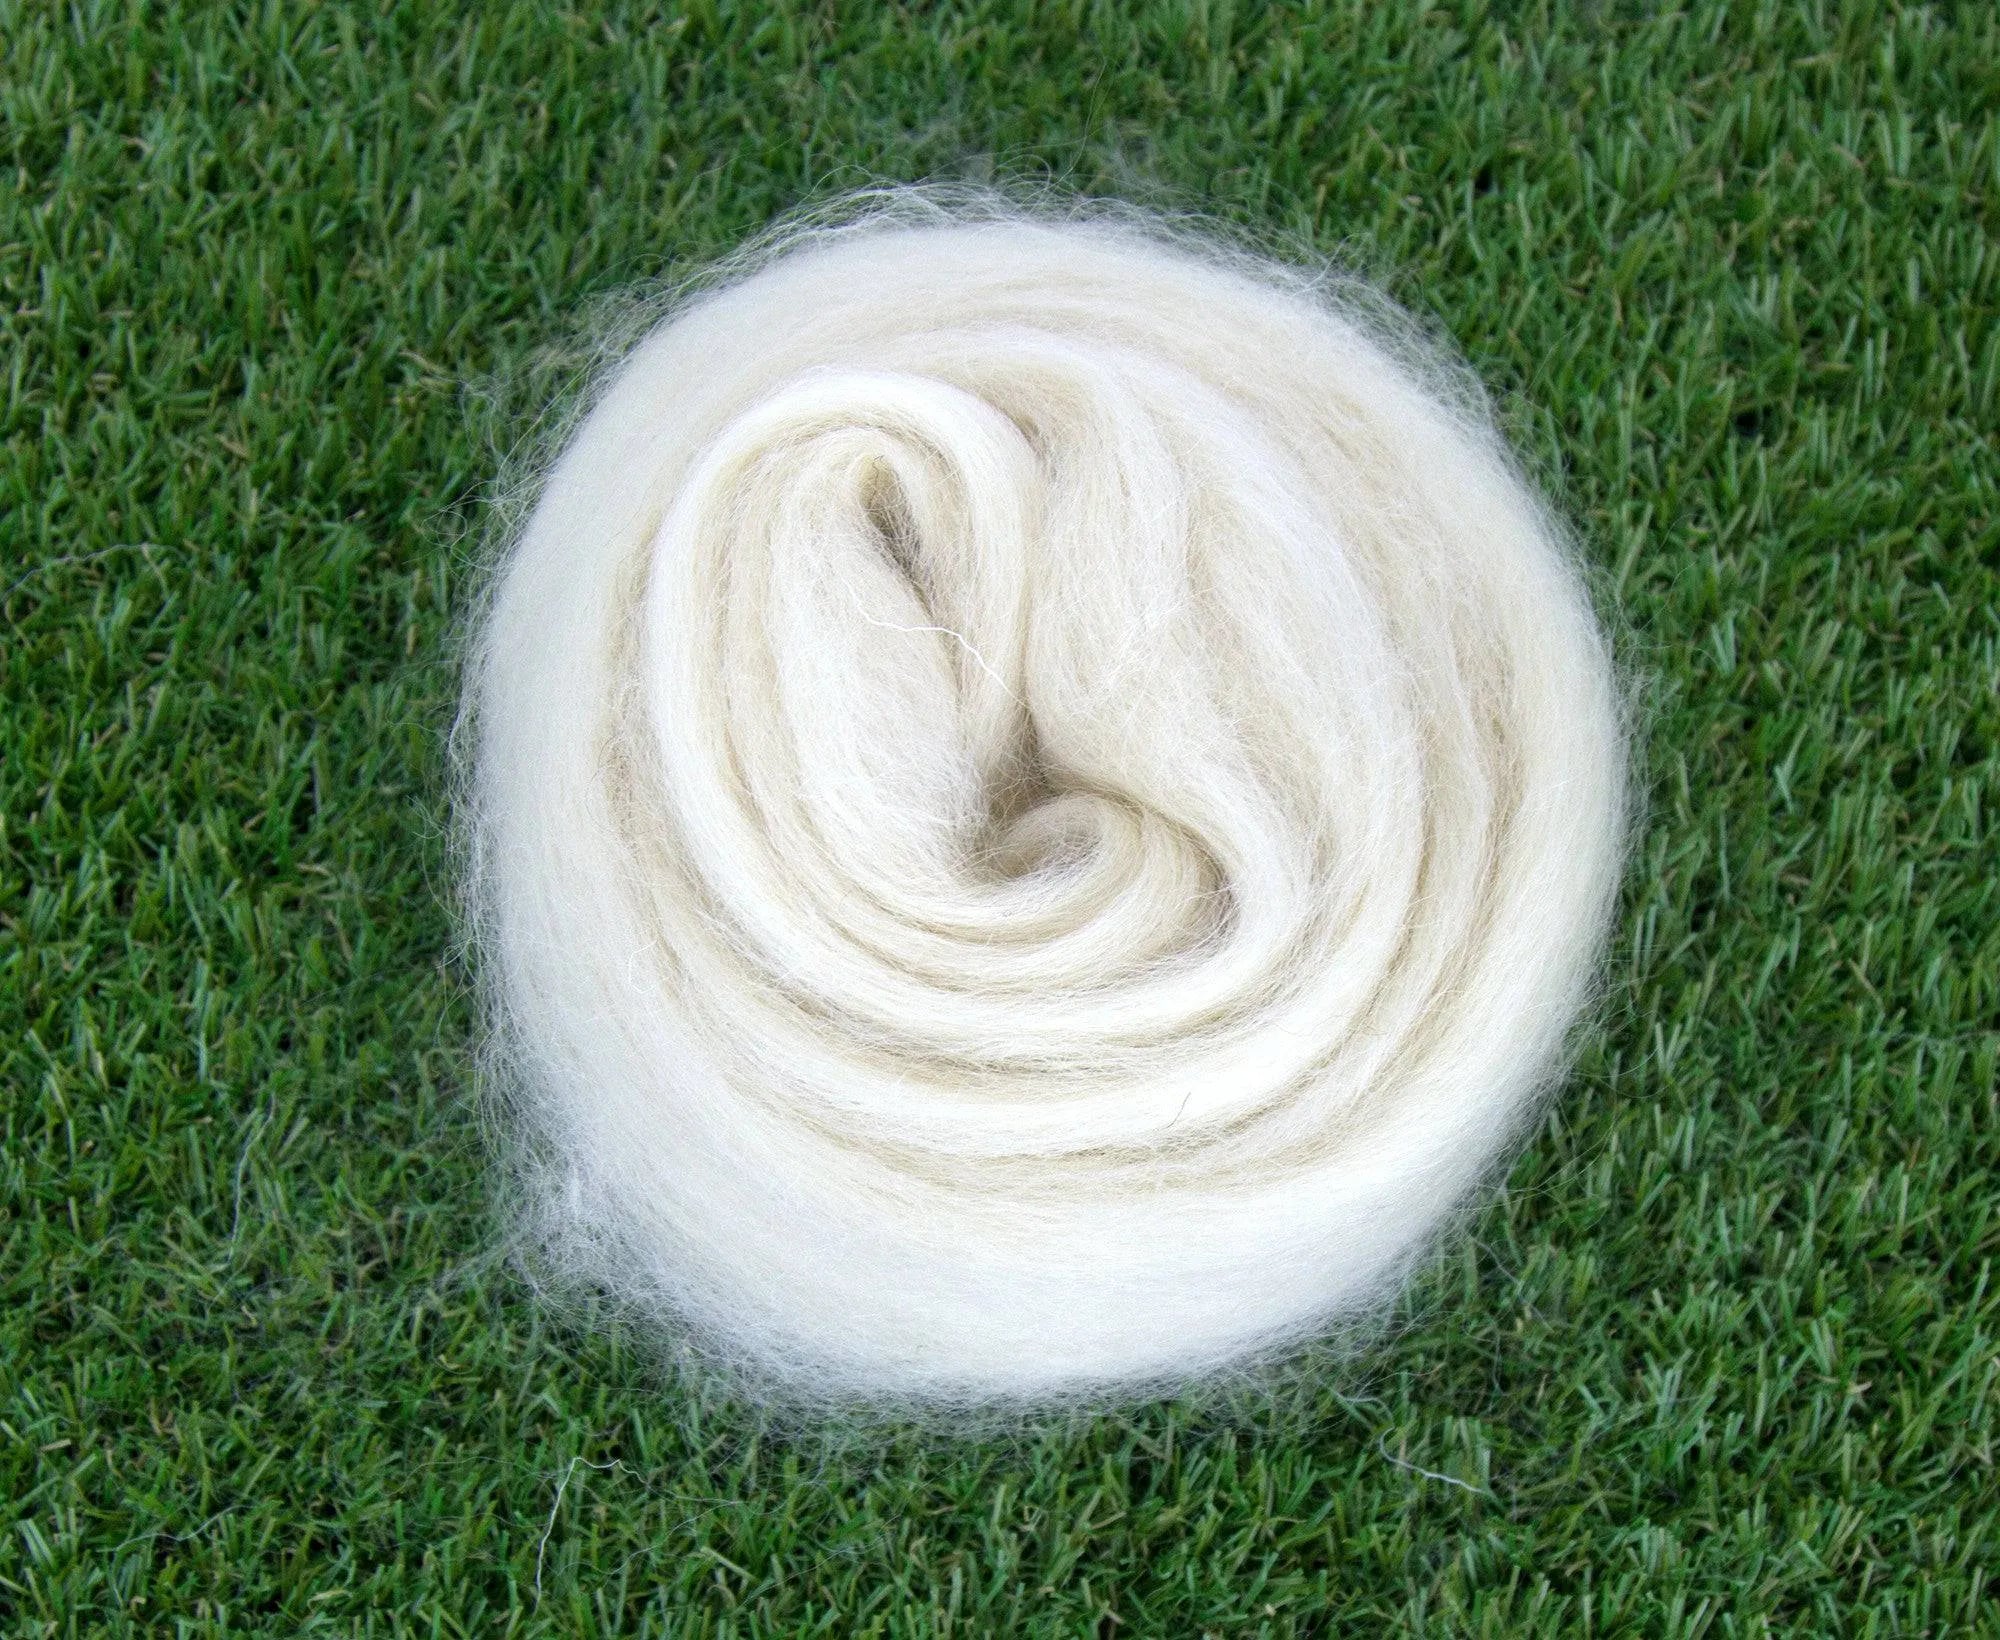 Wensleydale Top - World of Wool